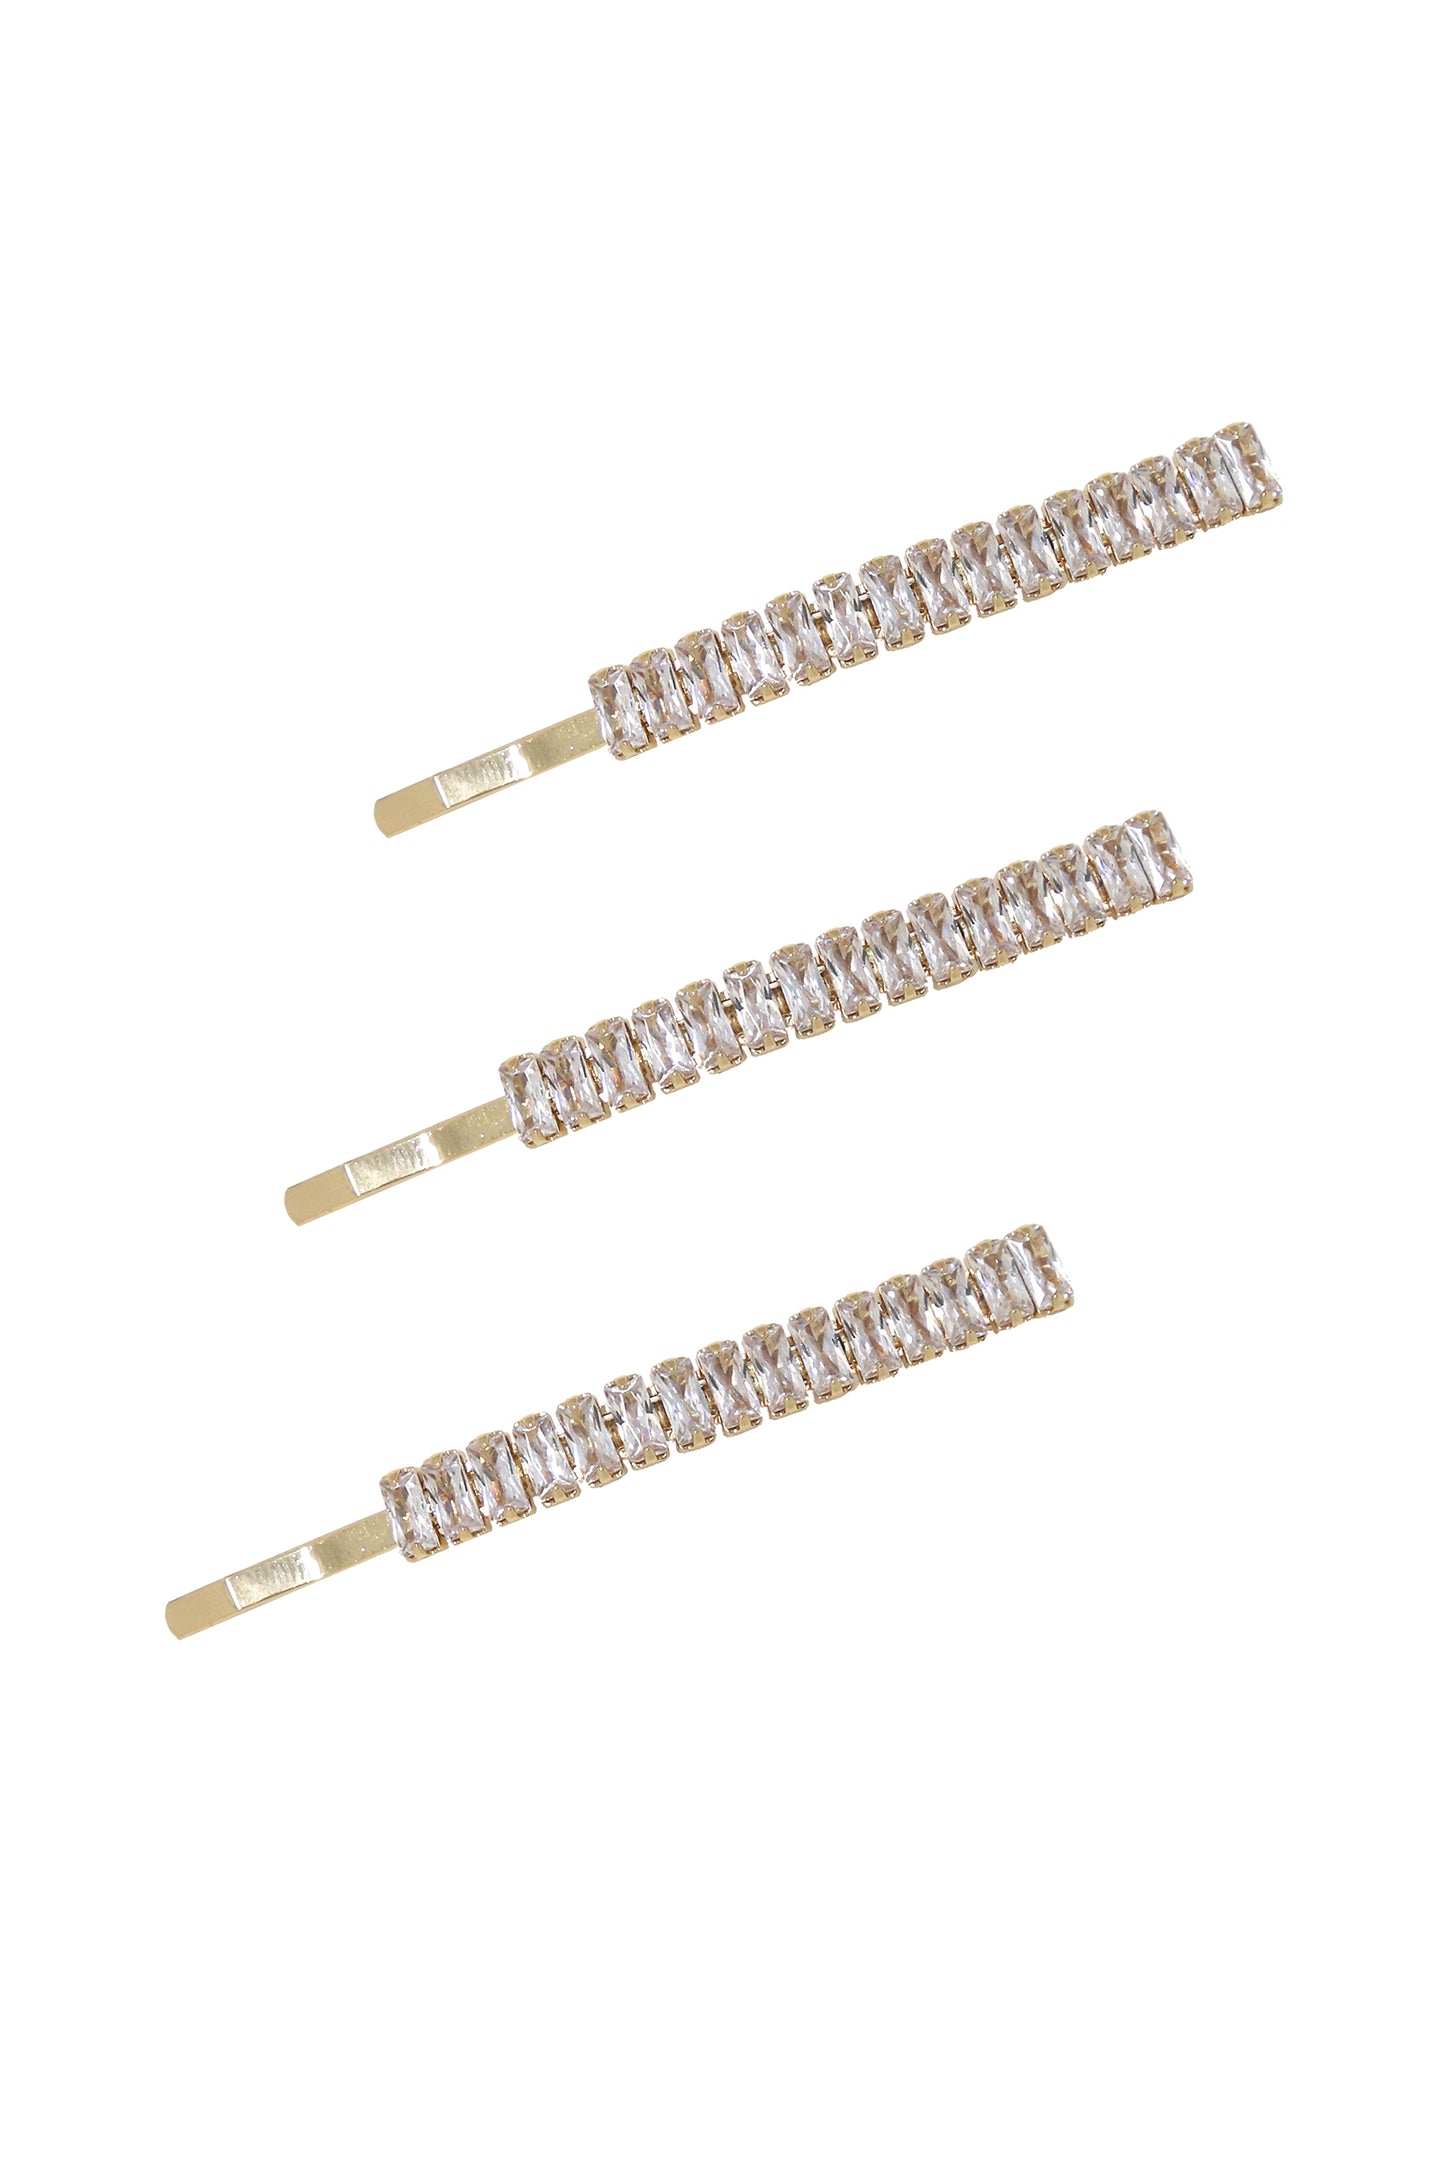 Narrow Crystal Roads Hair Pin Set on white background  